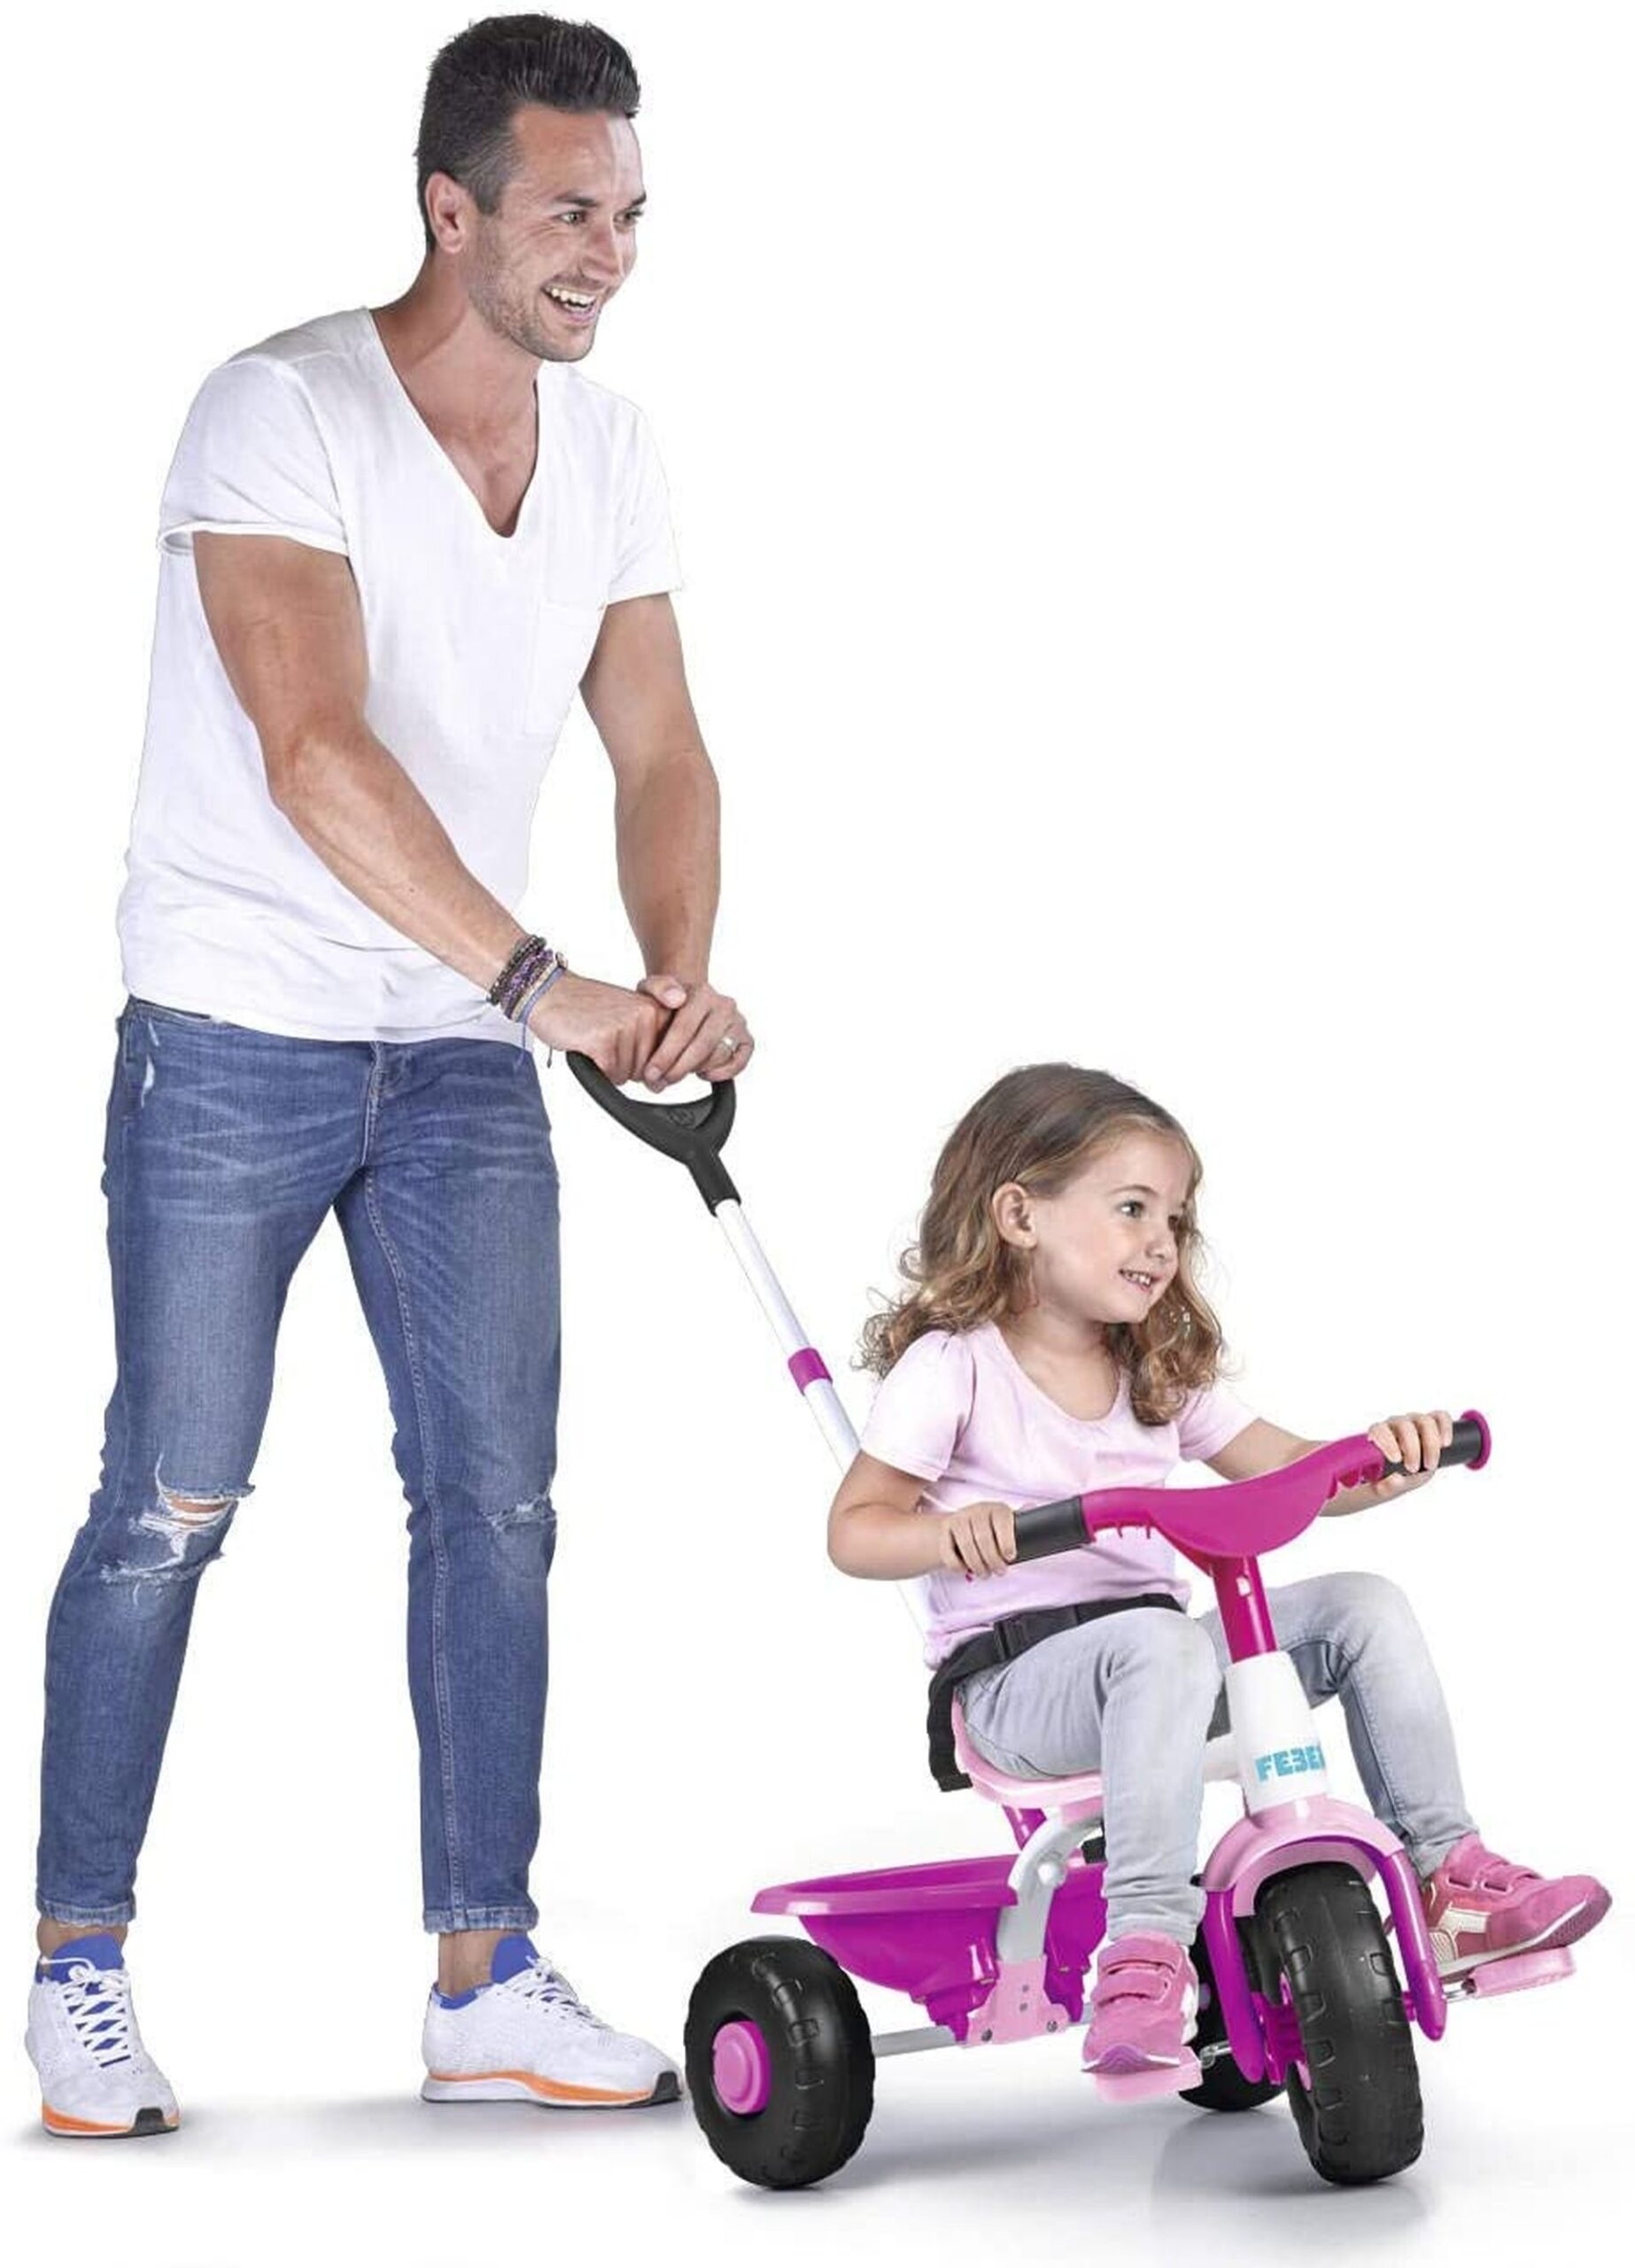 سيكل اطفال بنات زهري ثلاث كفرات مع حزام آمان ومقعد مريح فيبر Feber Comfortable Seat Safety Belt 3 Wheels Pink Trike Baby - 2}